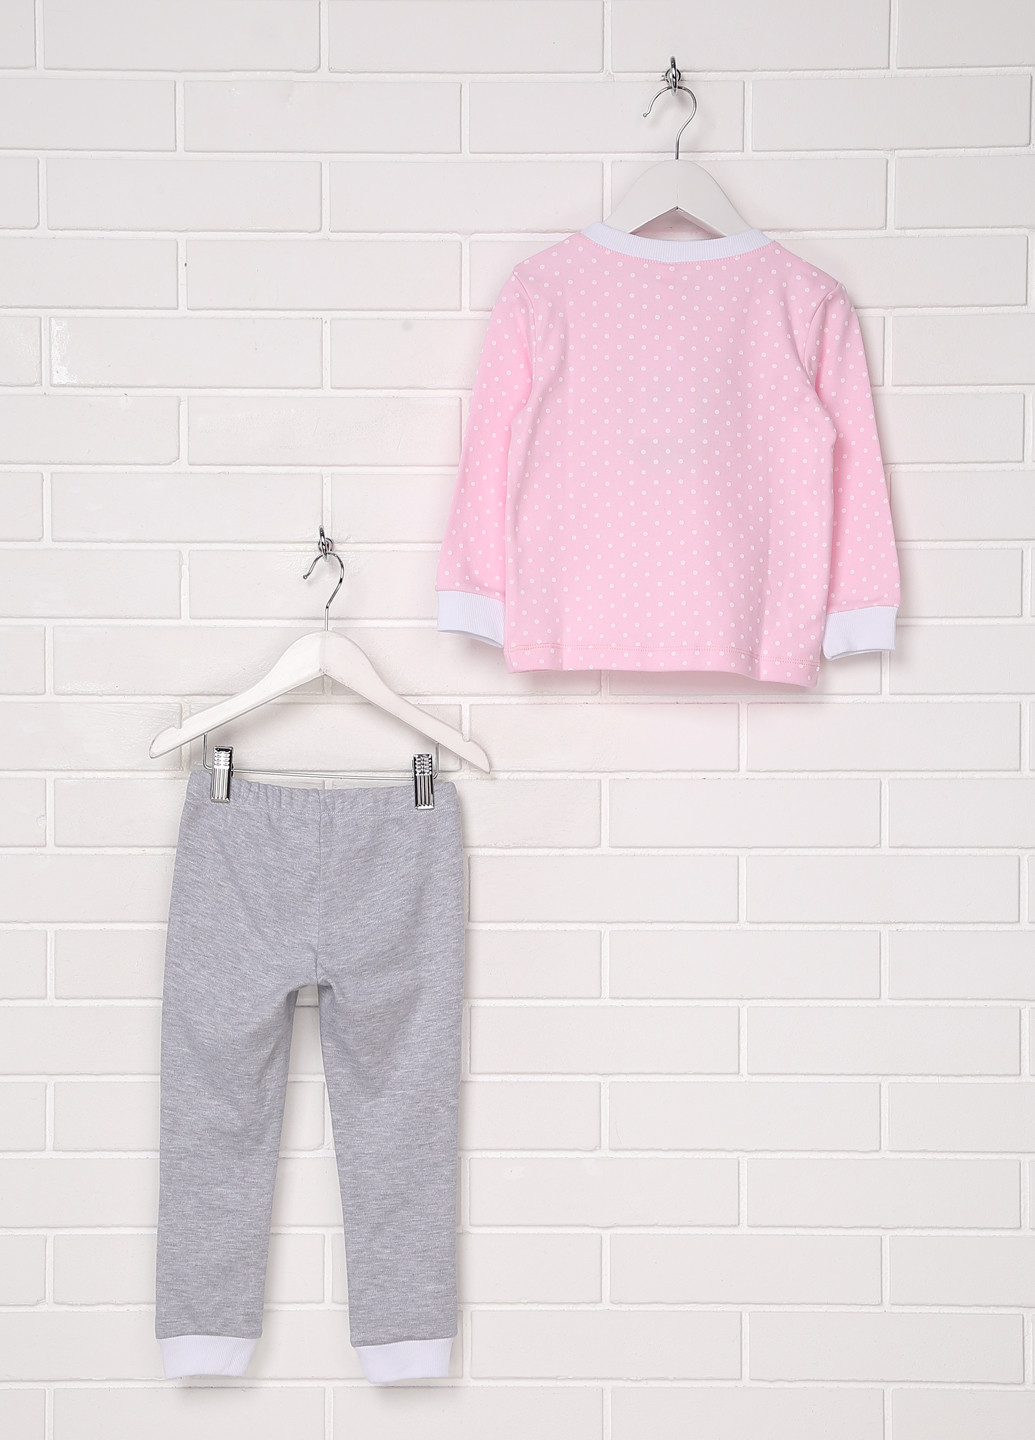 Розовая всесезон пижама (лонгслив, брюки) лонгслив + брюки Vidoli